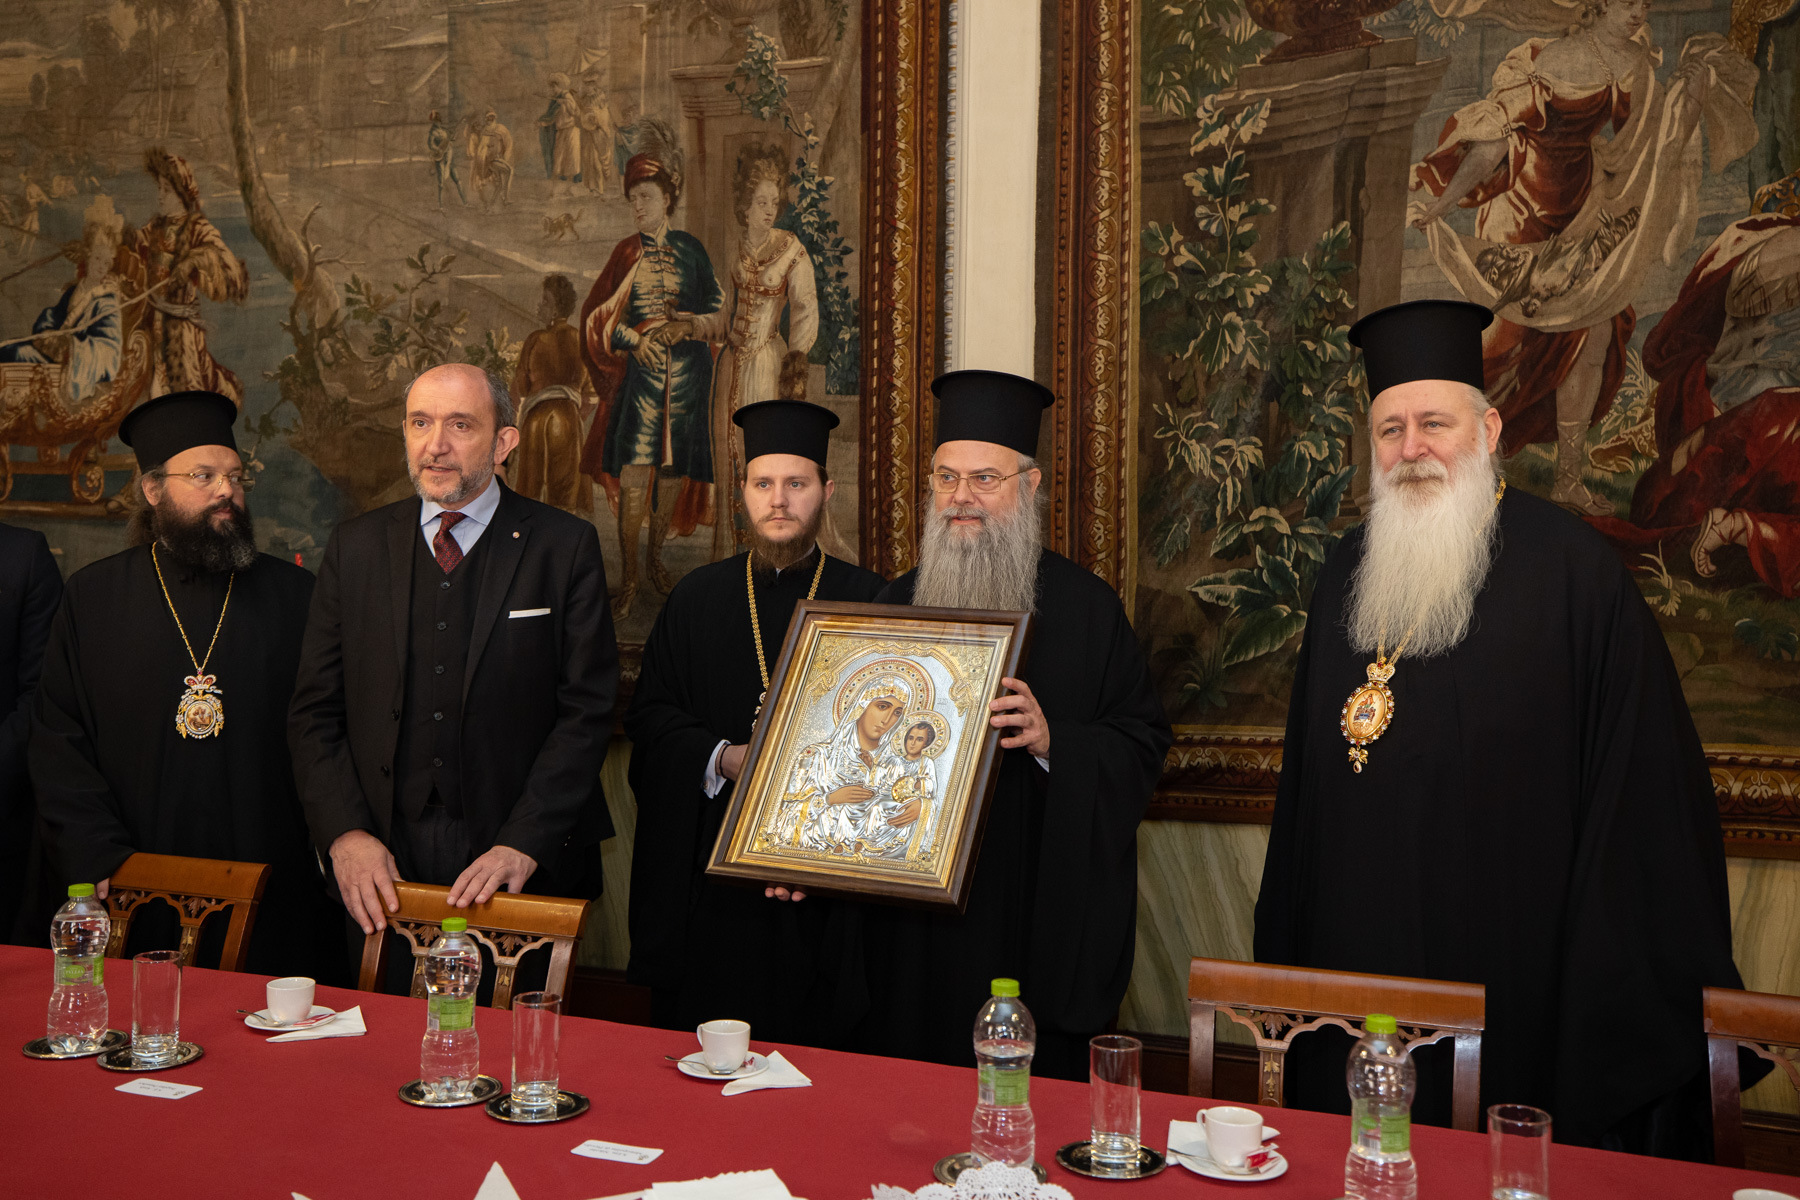 Metropolitan Nicholay of Plovdiv visited the Order of Malta